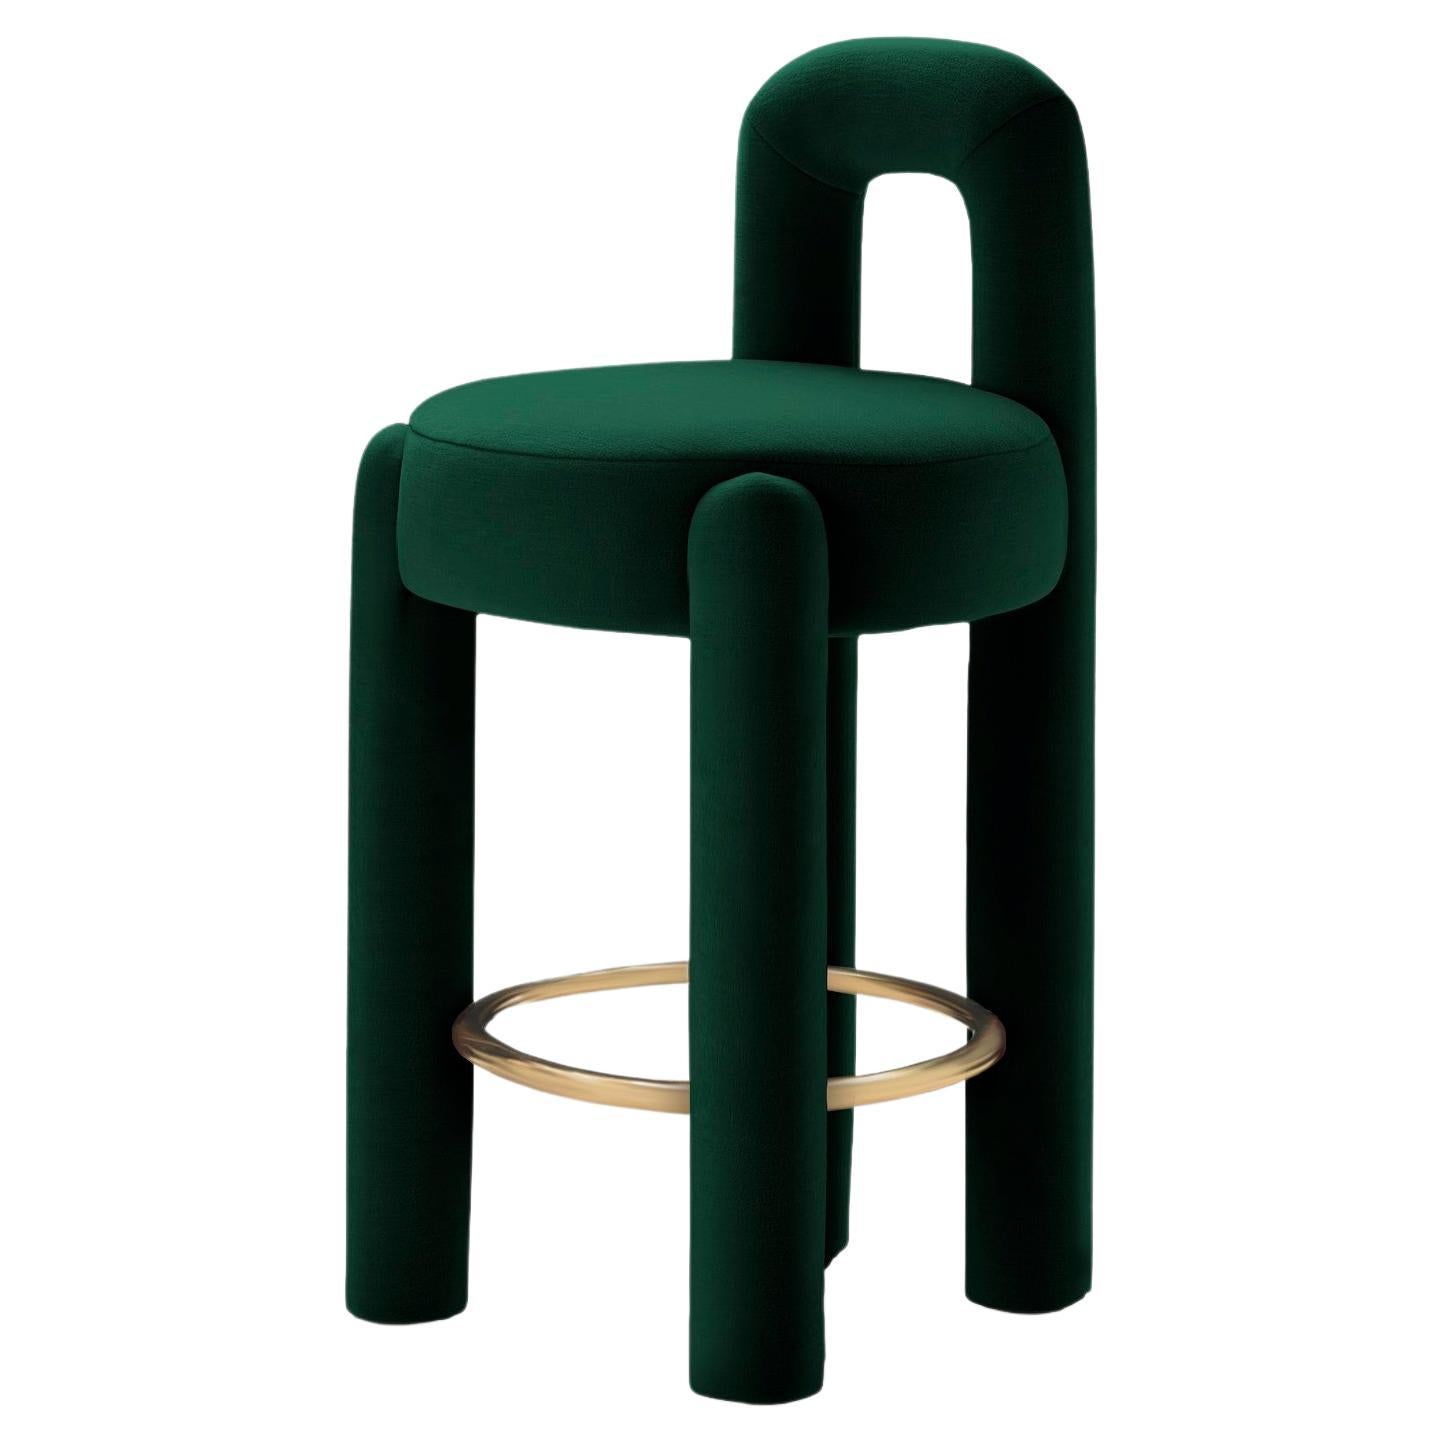 DOOQ! Modern Marlon Counter Chair in Dark Green Kvadrat by P. Franceschini For Sale